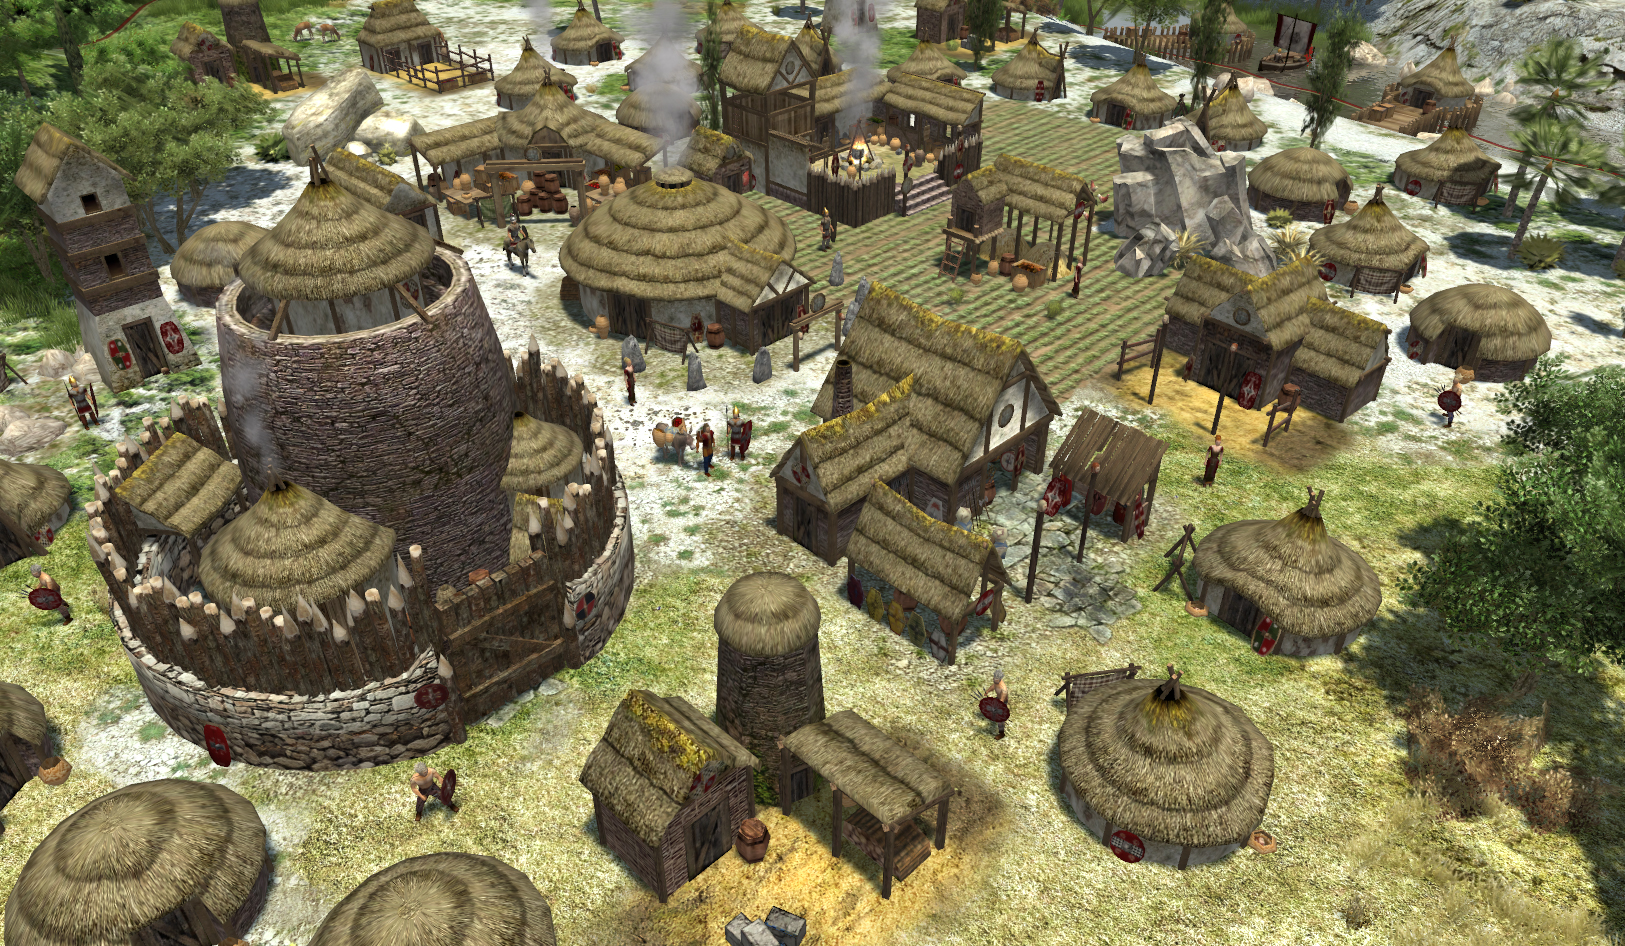 Игра про древних людей. Игра RTS Империя. Age of Empires 3 цивилизации. RTS игр (real-time Strategy). Фэнтези стратегии.